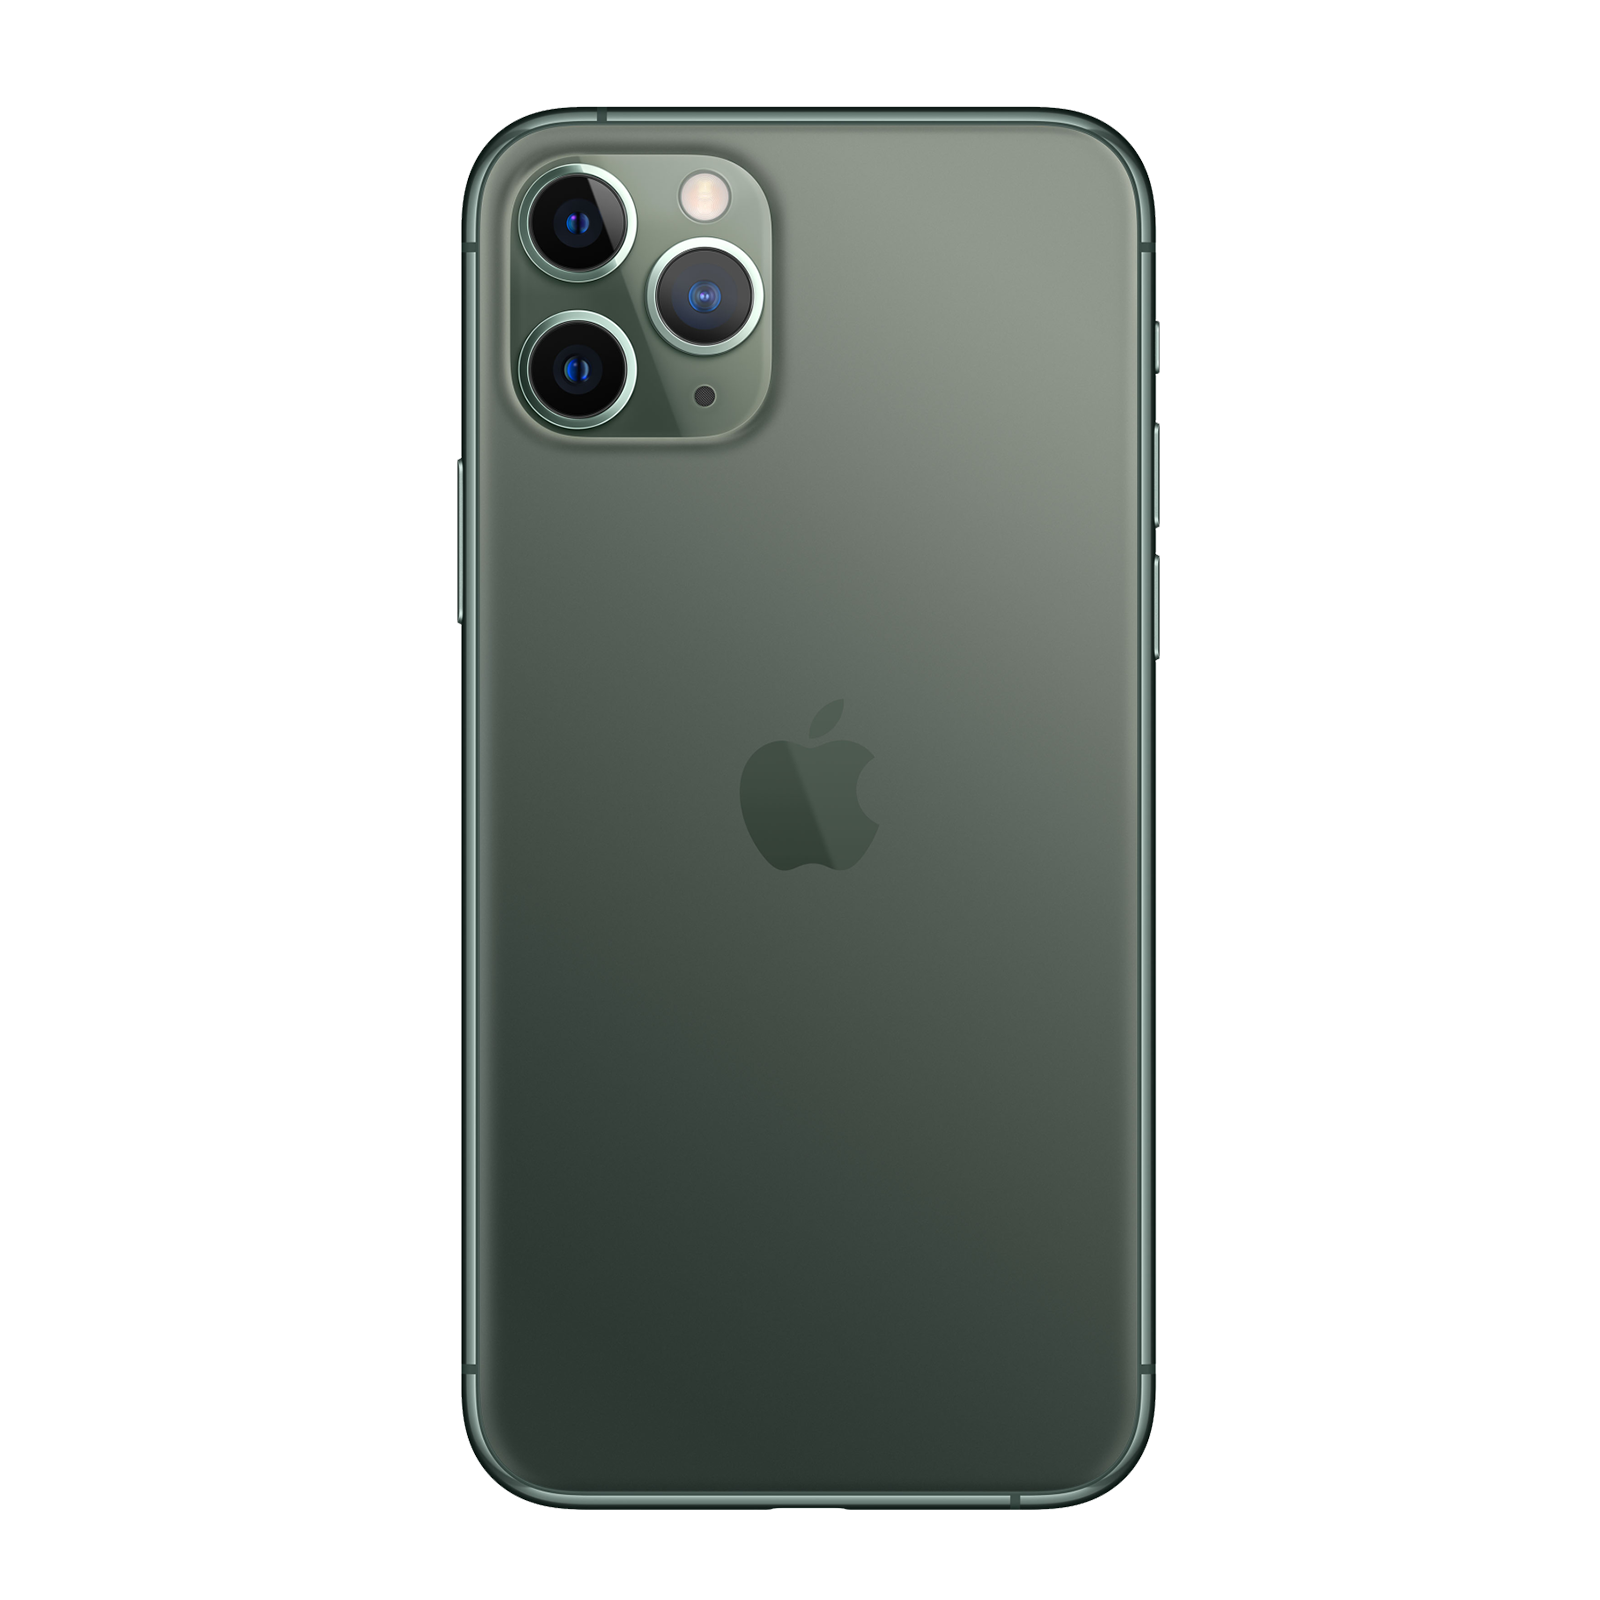 Apple iPhone 11 Pro Max 256GB Midnight Green Fair - Sprint